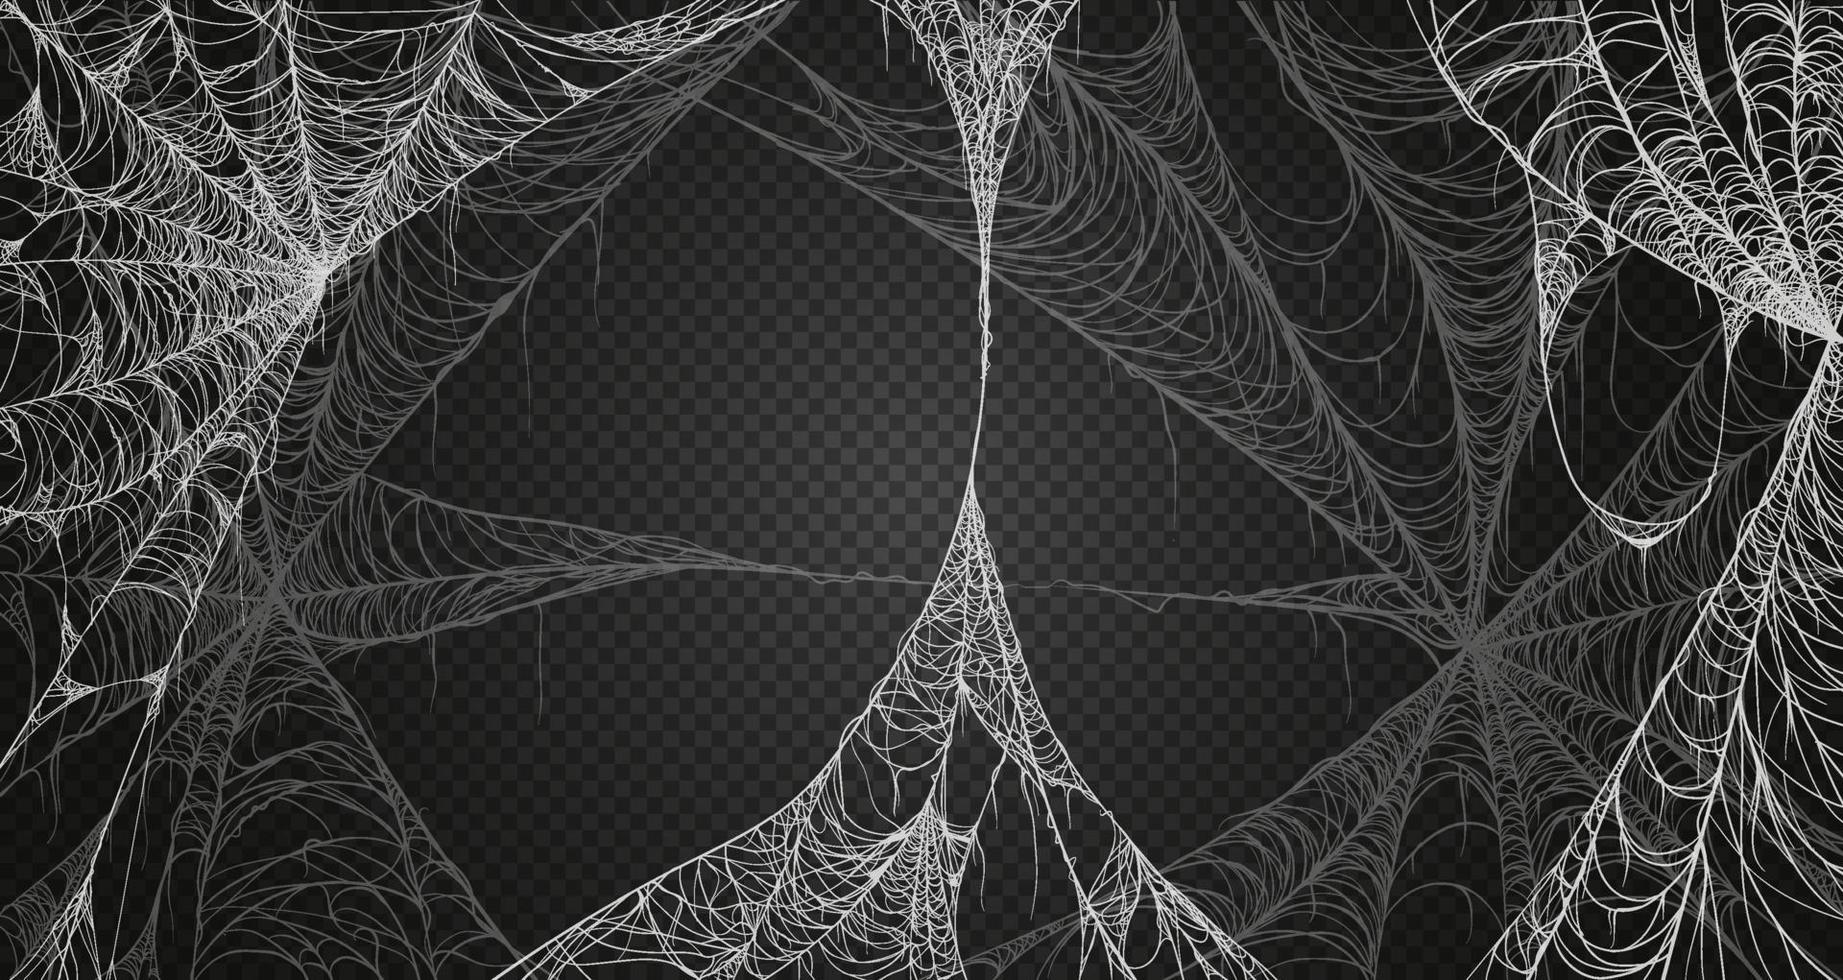 Cobweb realism set. Spiderweb for halloween, spooky, scary, horror decor vector